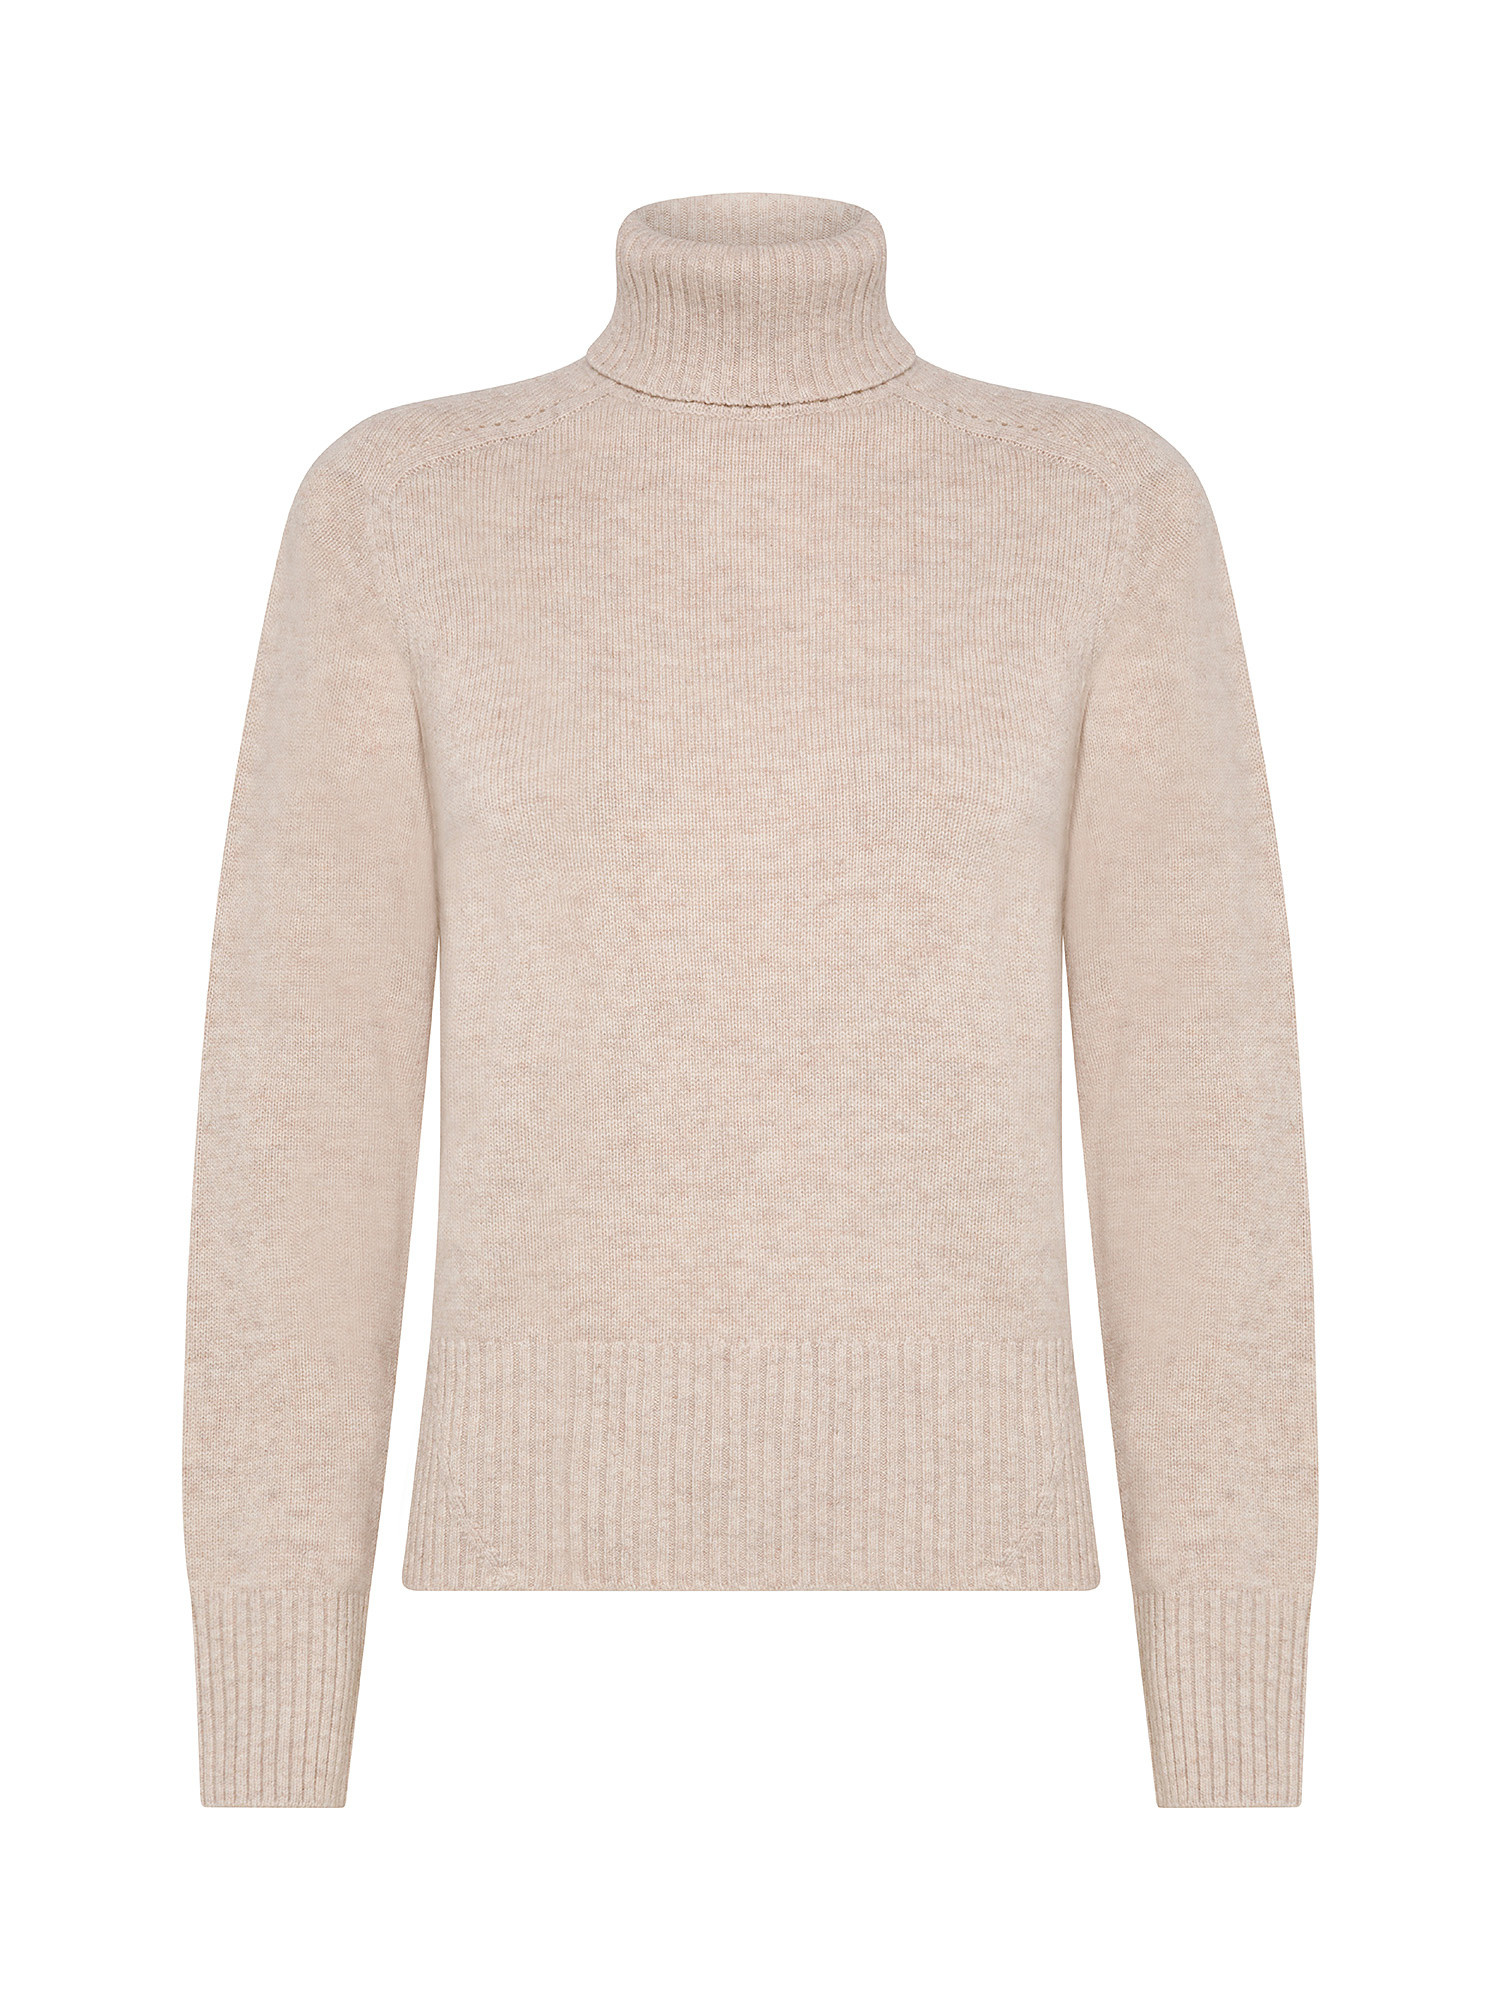 Ecoalf - Cisa turtleneck sweater, Light Beige, large image number 0